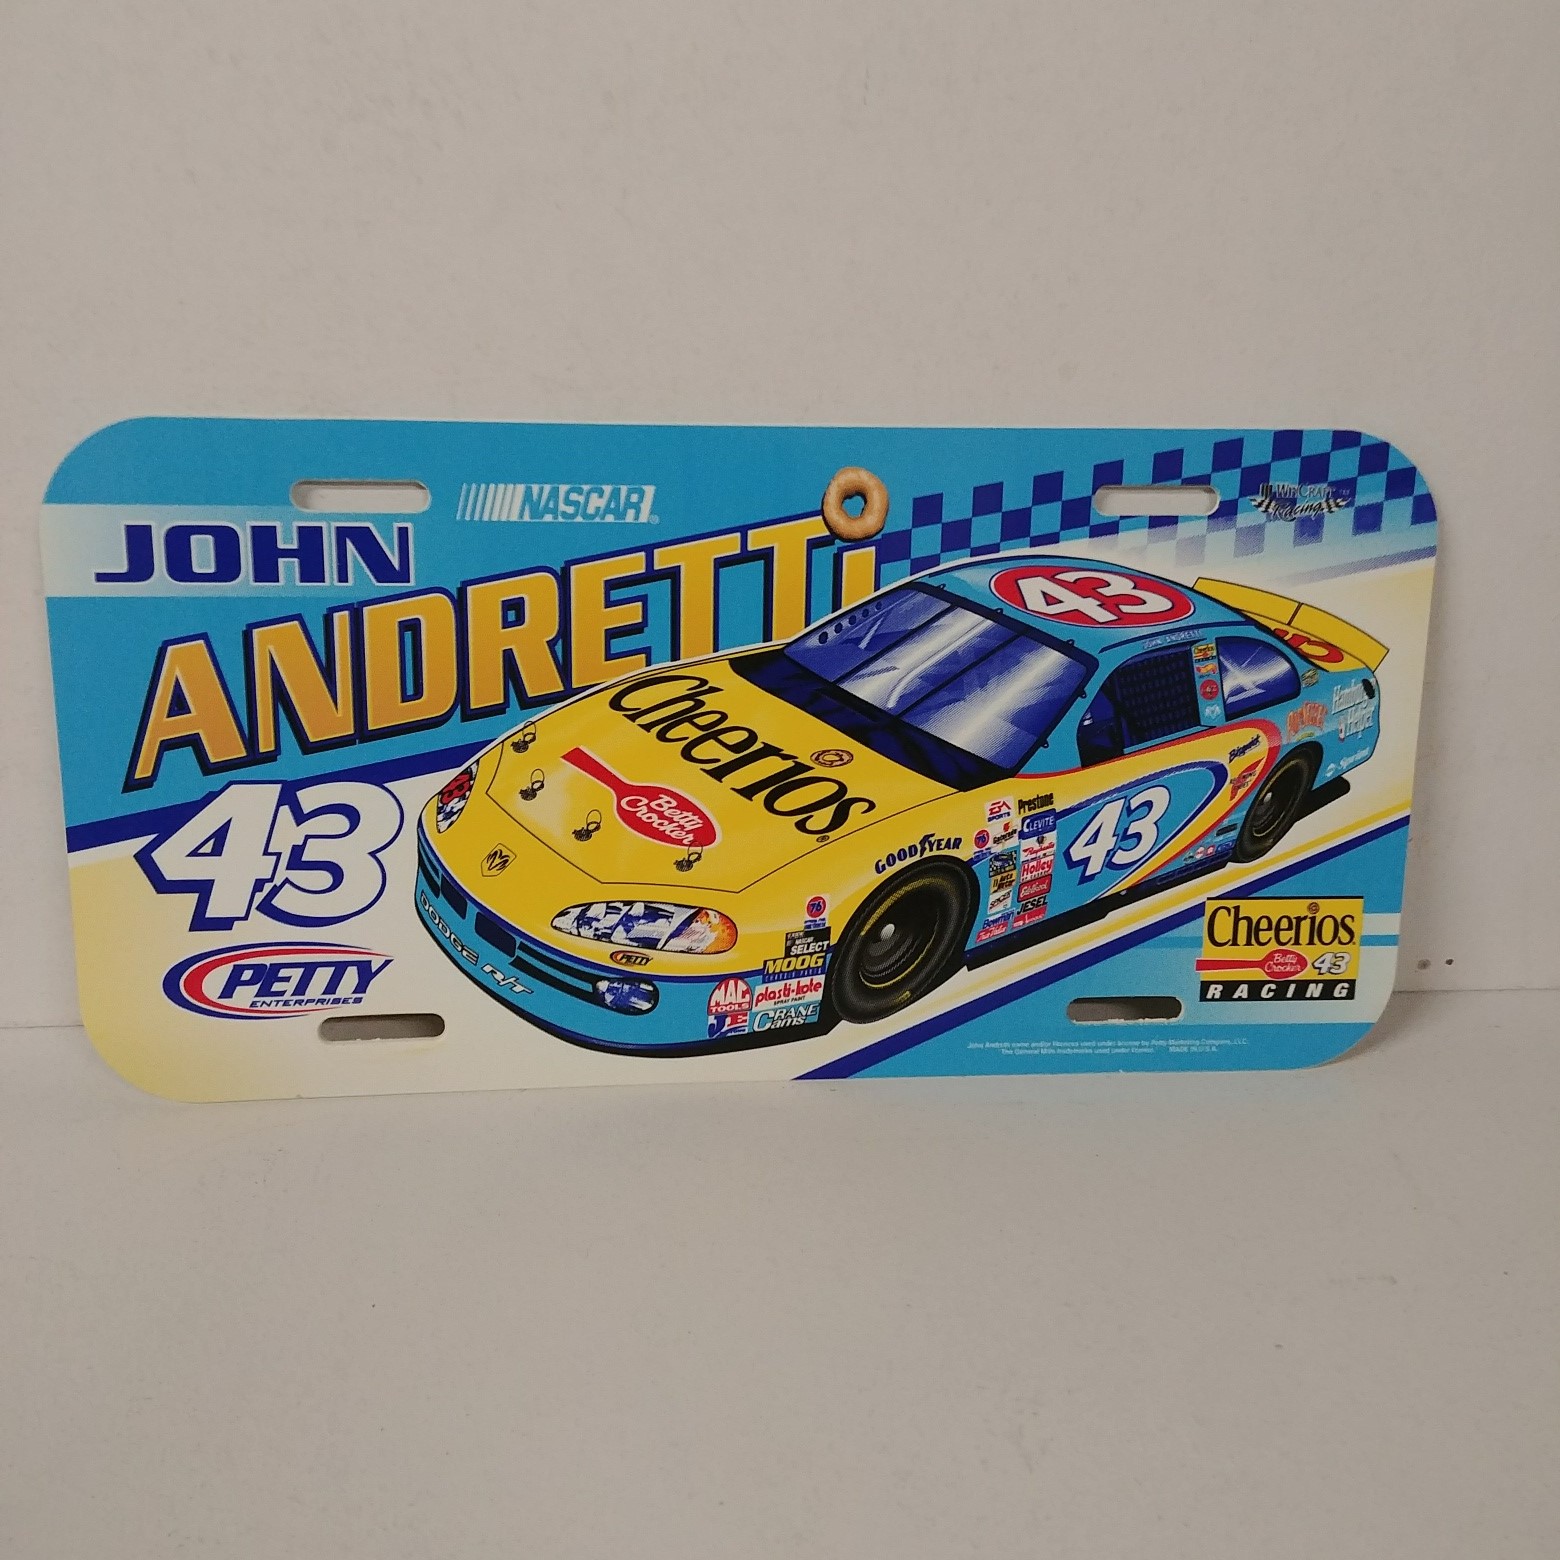 2002 John Andretti Cheerios plastic license plate